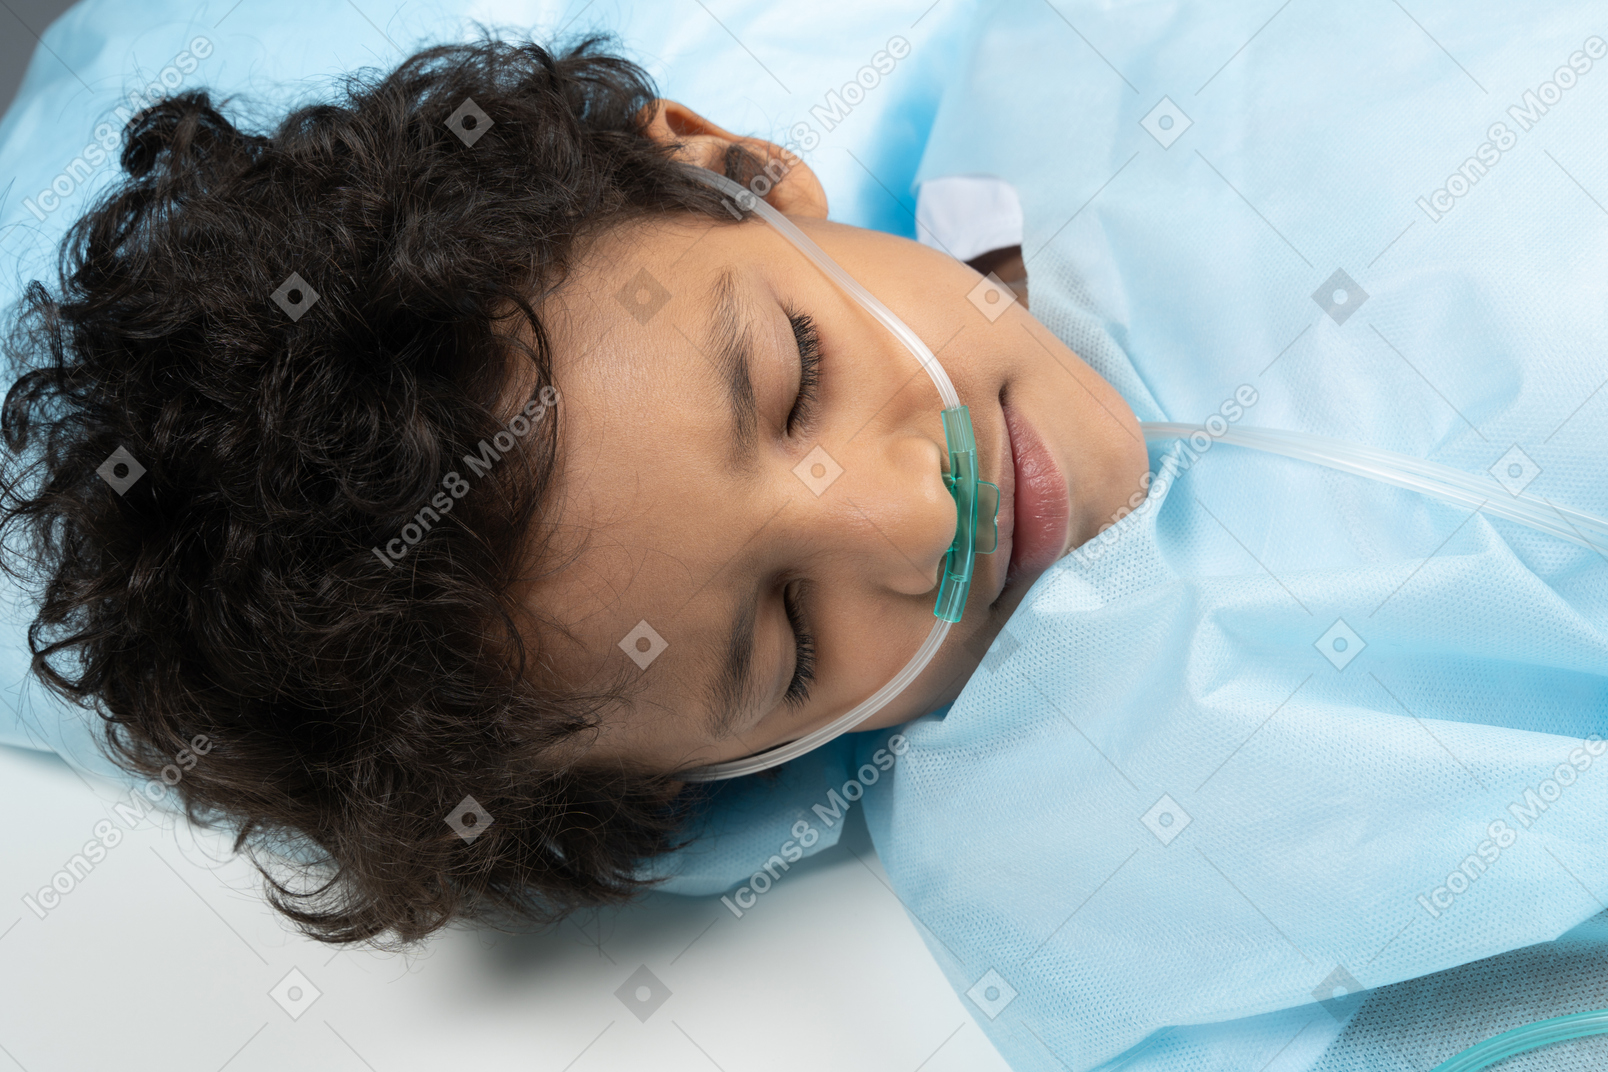 Niño bajo anestesia